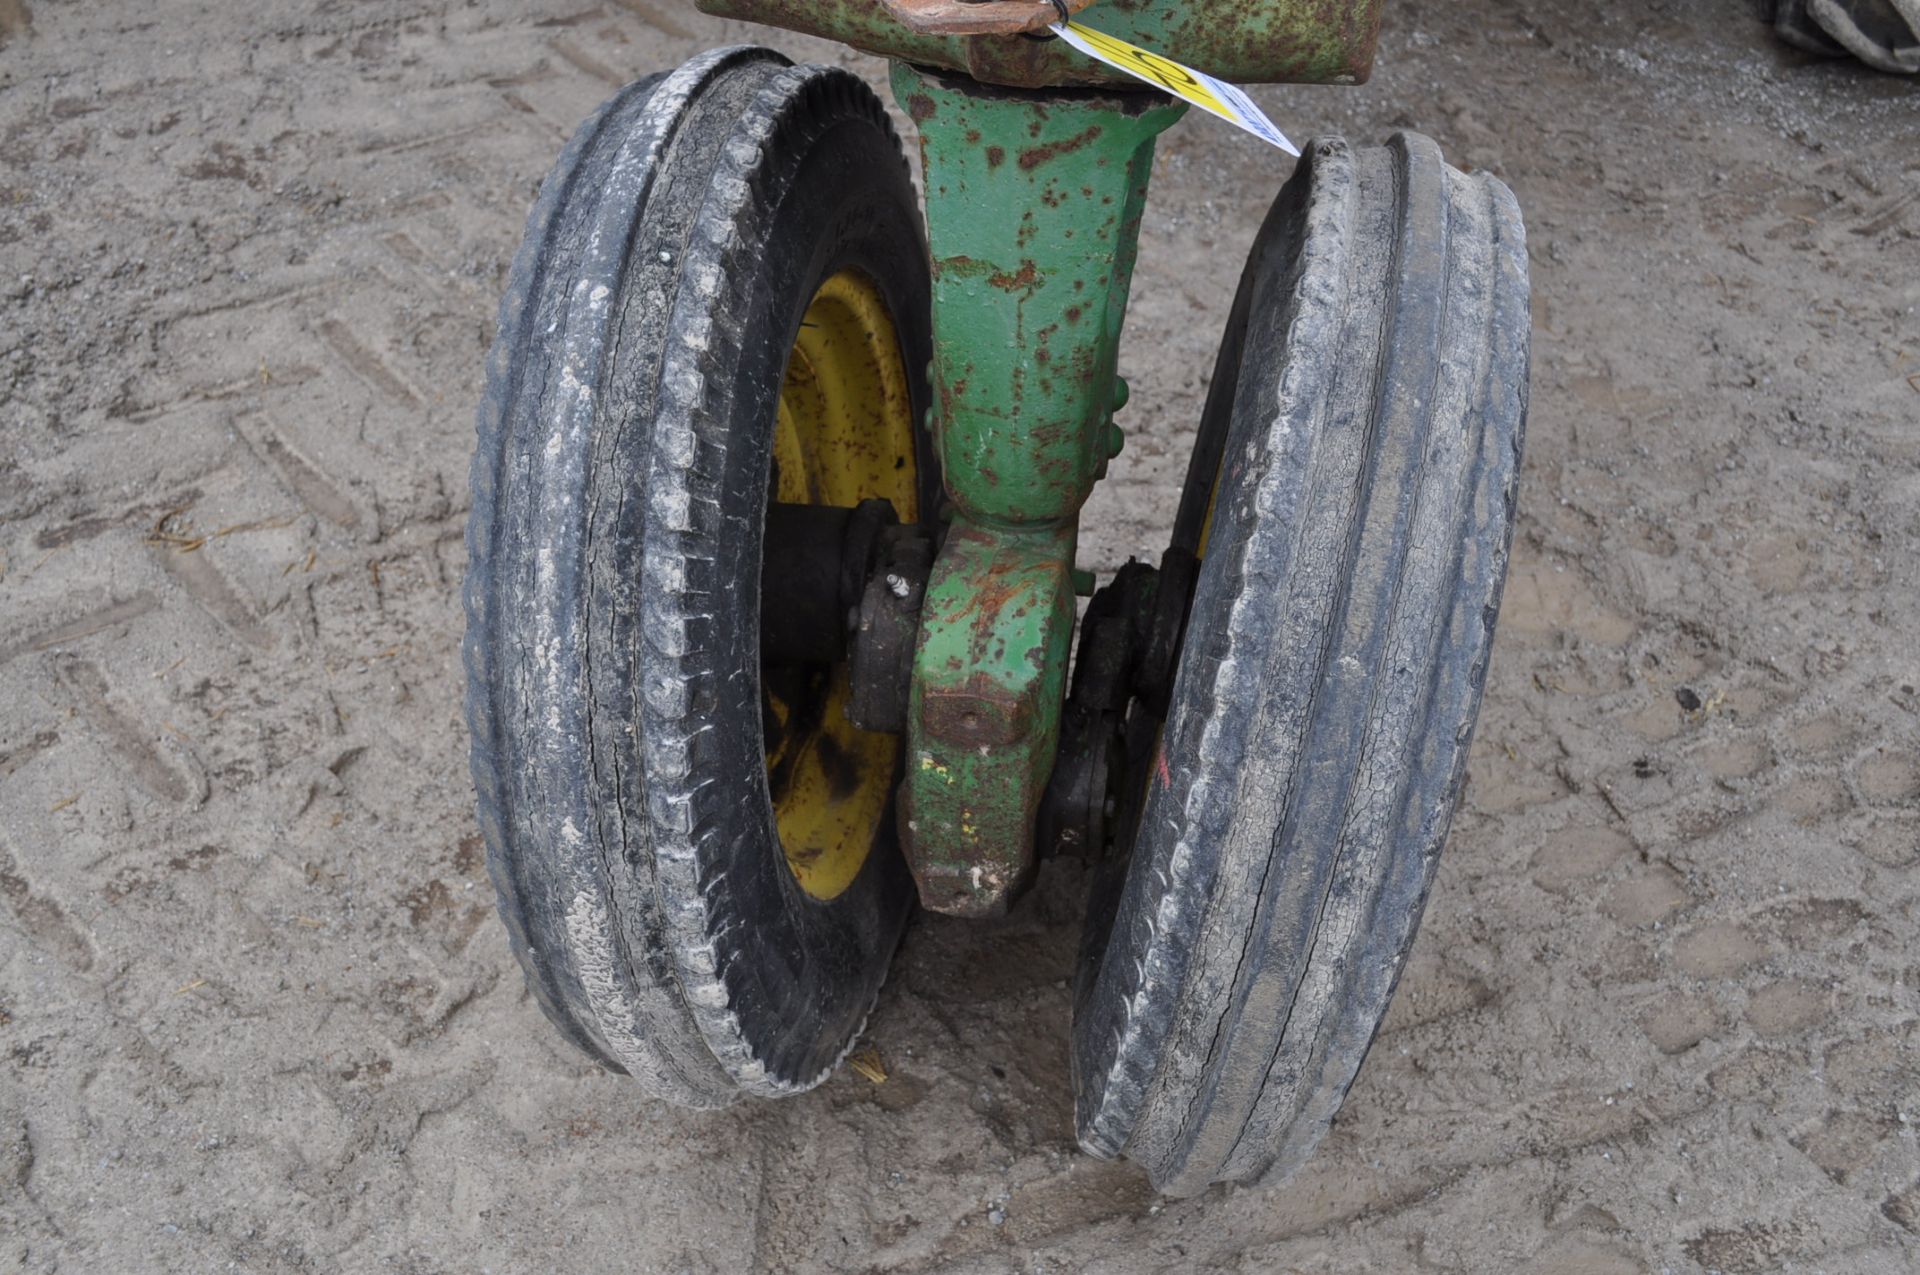 John Deere 520 tractor, LP, 13.6-12-36 rear tires, 6.00-19 front tires, narrow front, power steering - Image 5 of 12